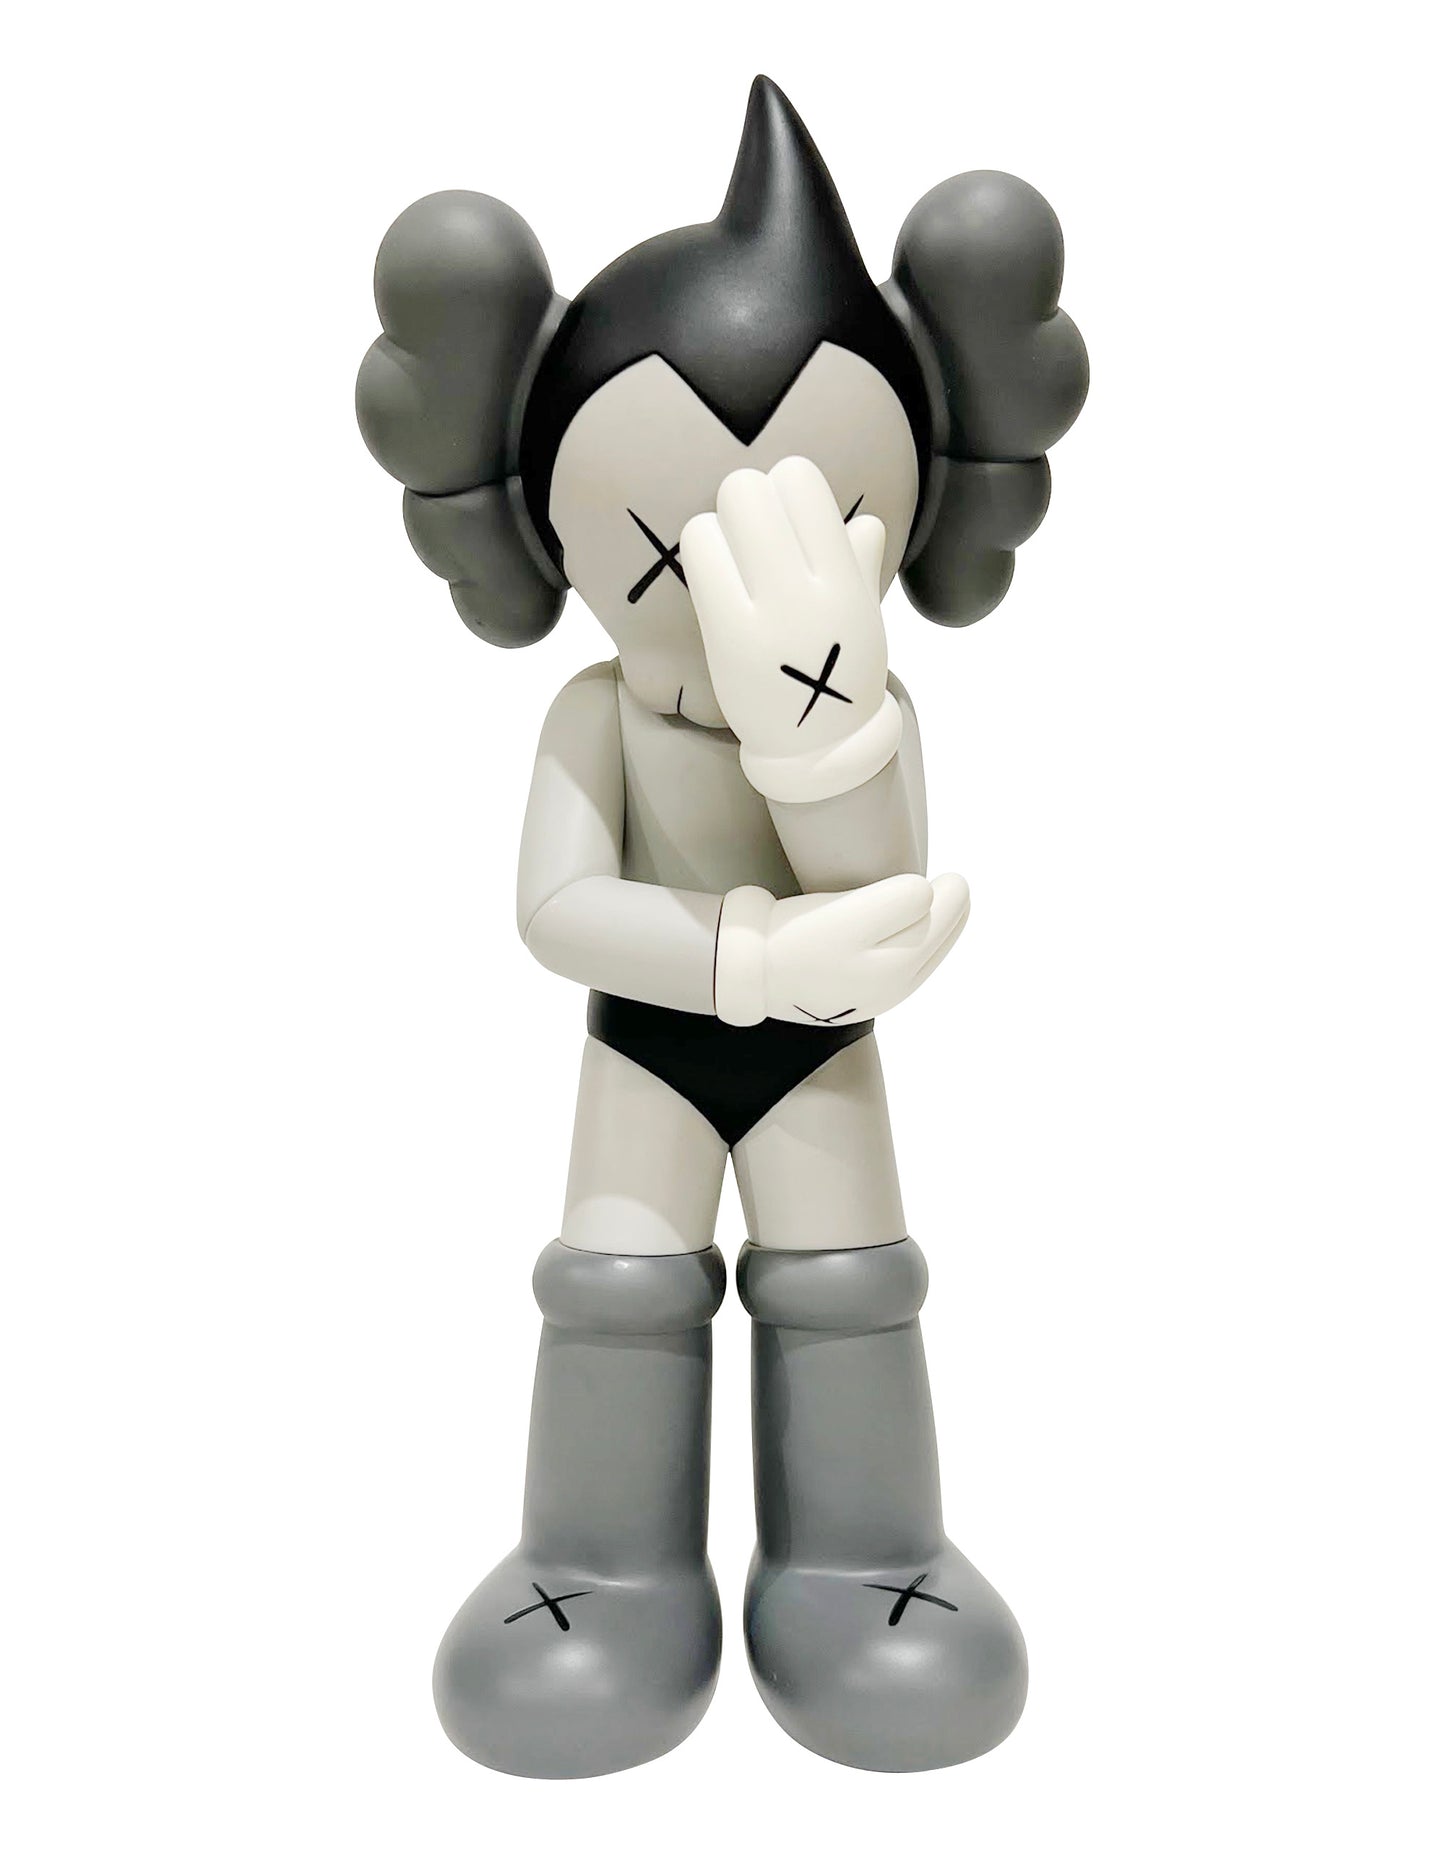 KAWS - Astro Boy Mono, 2012